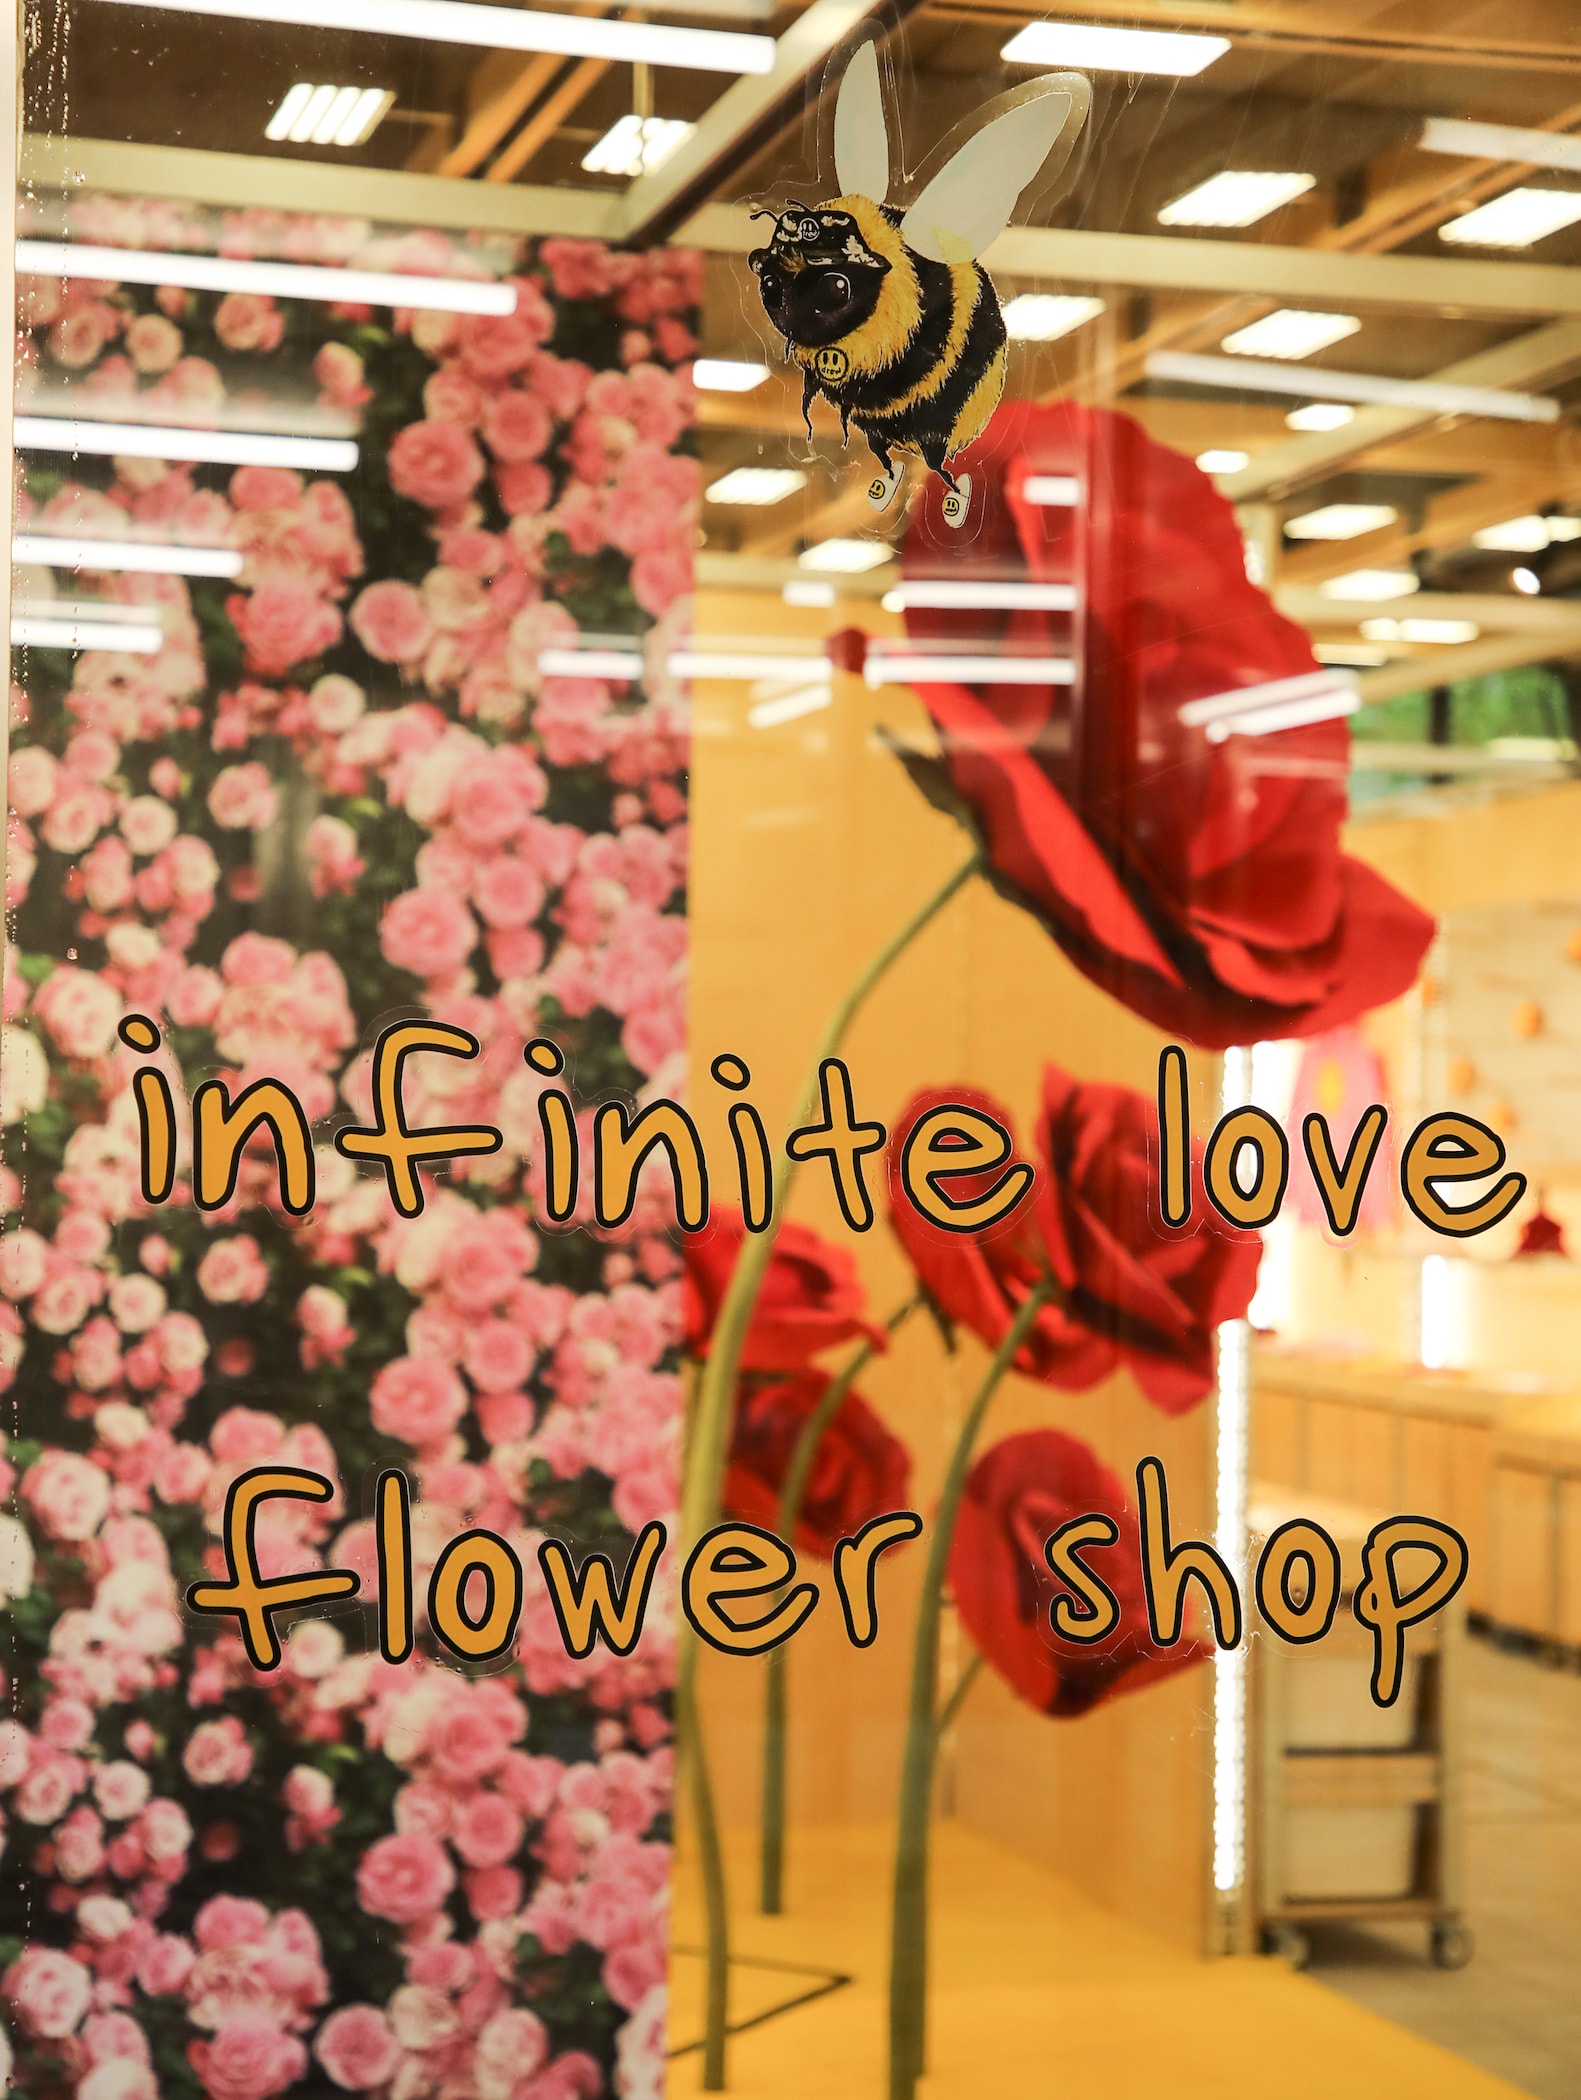 走进 drew house 全新「infinite love flower shop」无限爱快闪花店